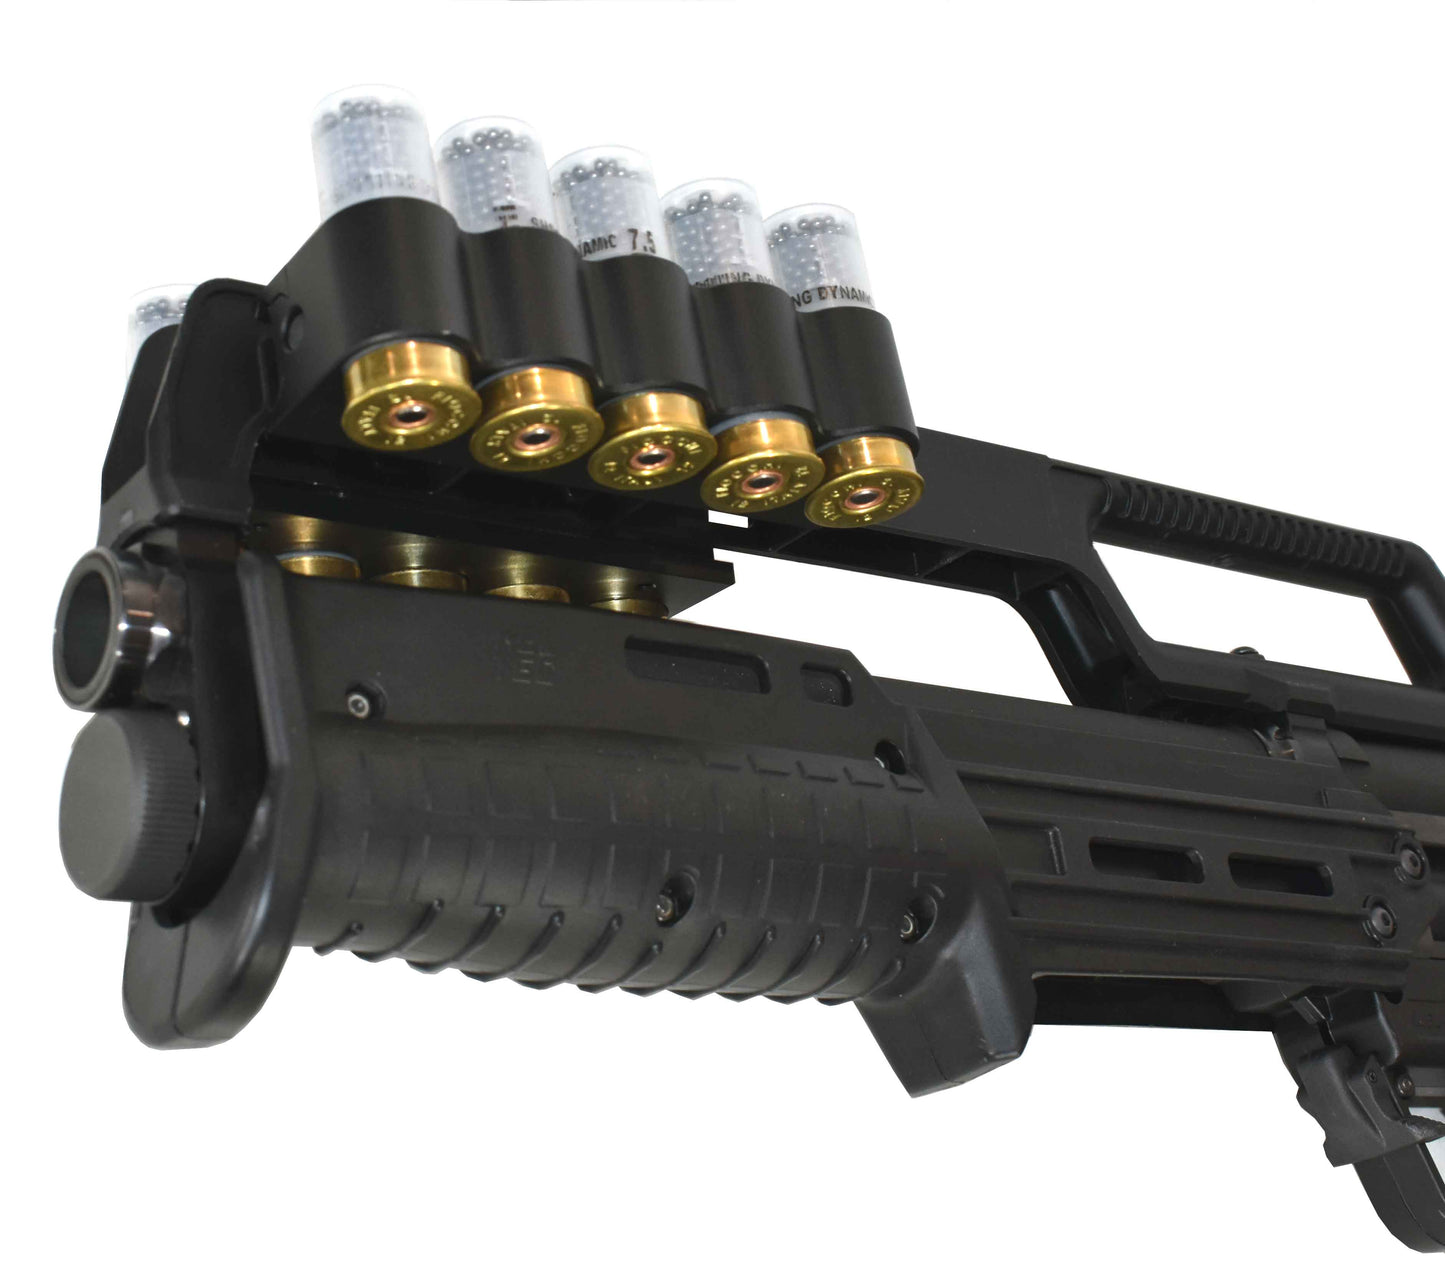 Kel-Tec KS7 12 Gauge Pump shell holder combo 10 rounds aluminum black hunting home defense tactical.